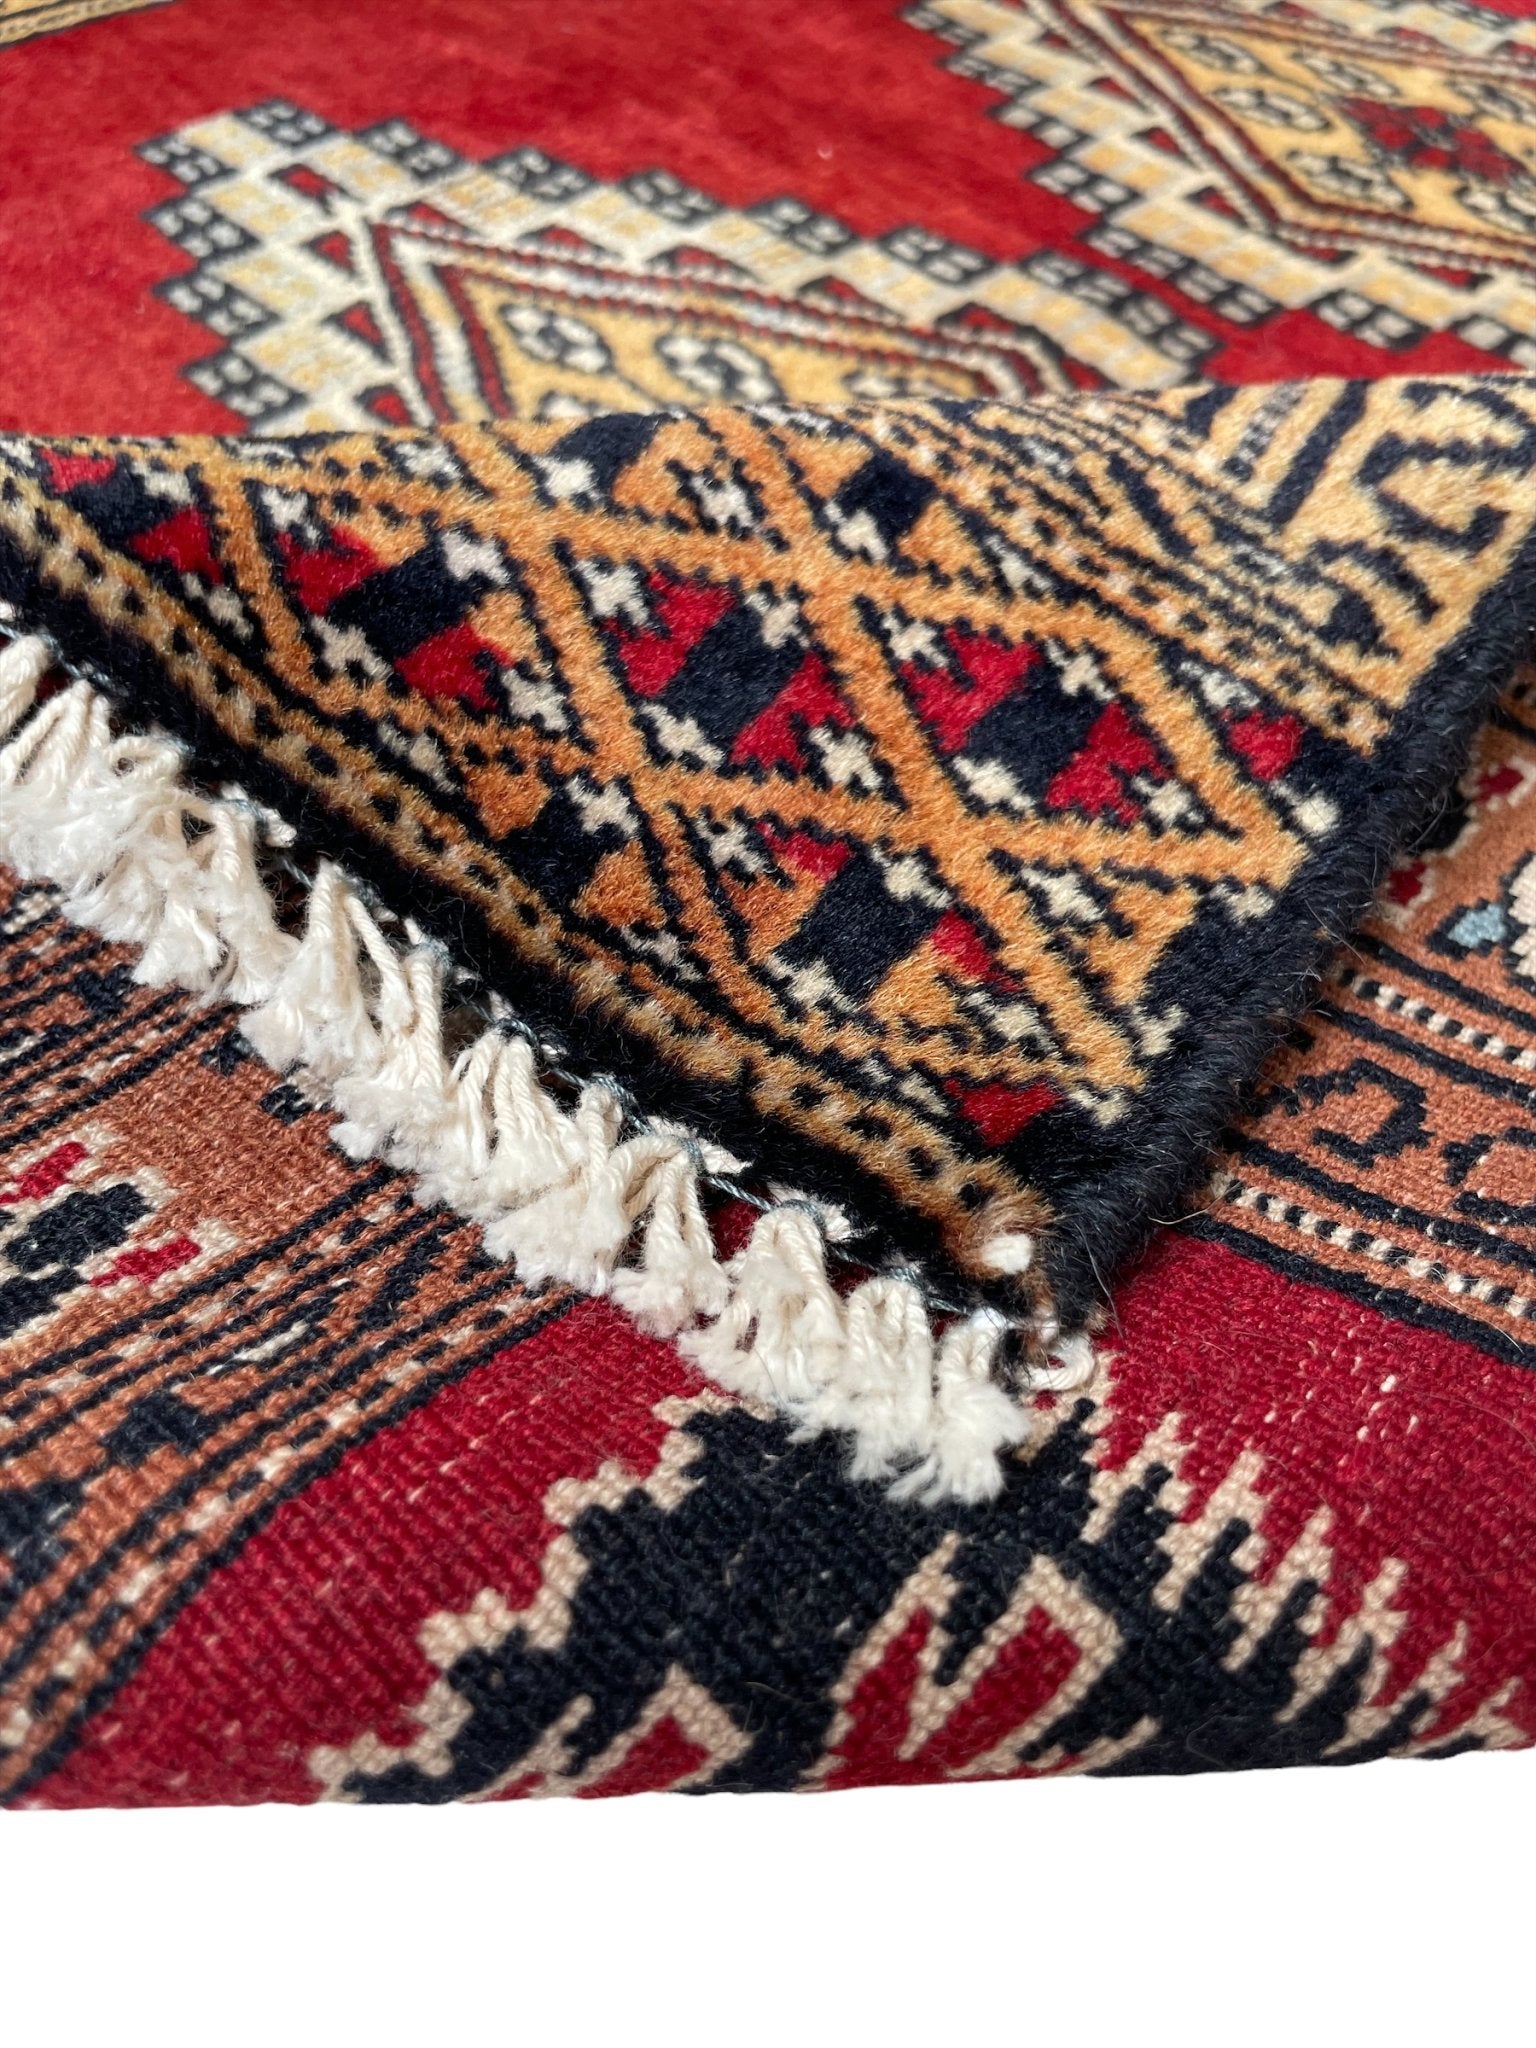 ISHQ 100% Wool Handmade Prayer Rug by Asrār Collection